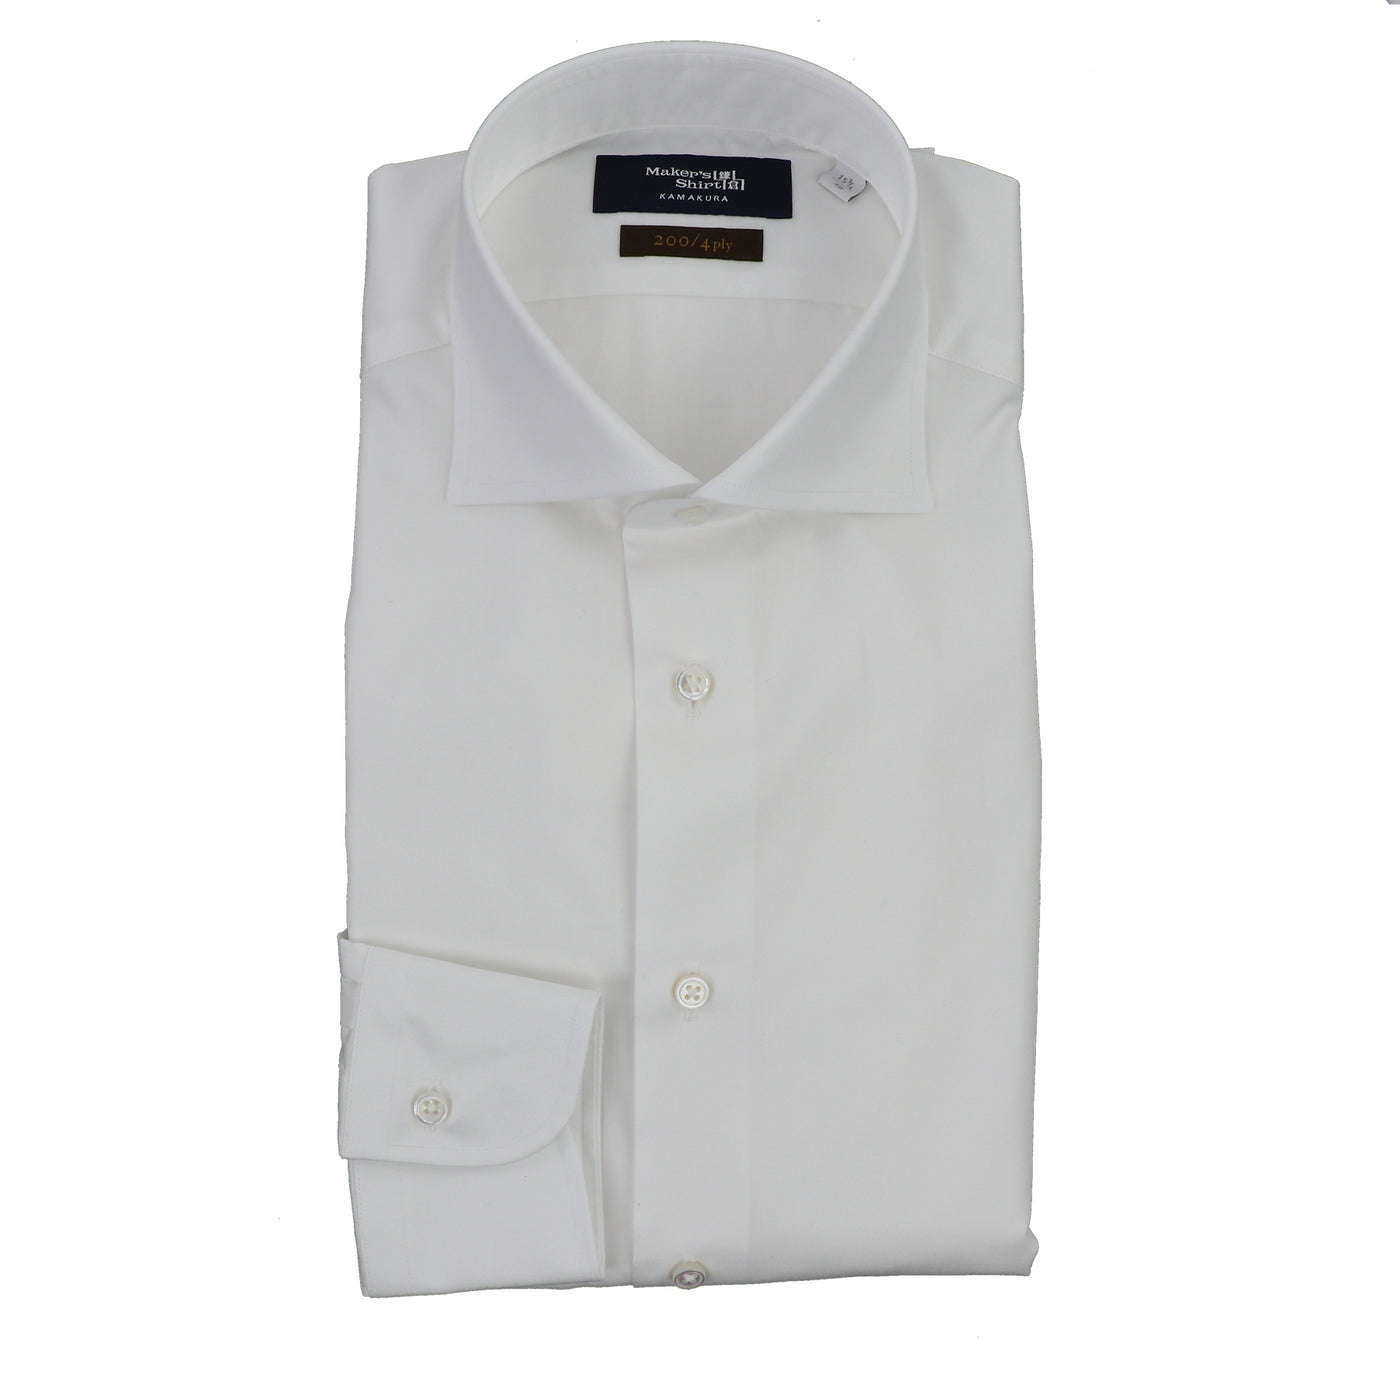 Maker's Luxury Dress Shirt in White 200s Cotton